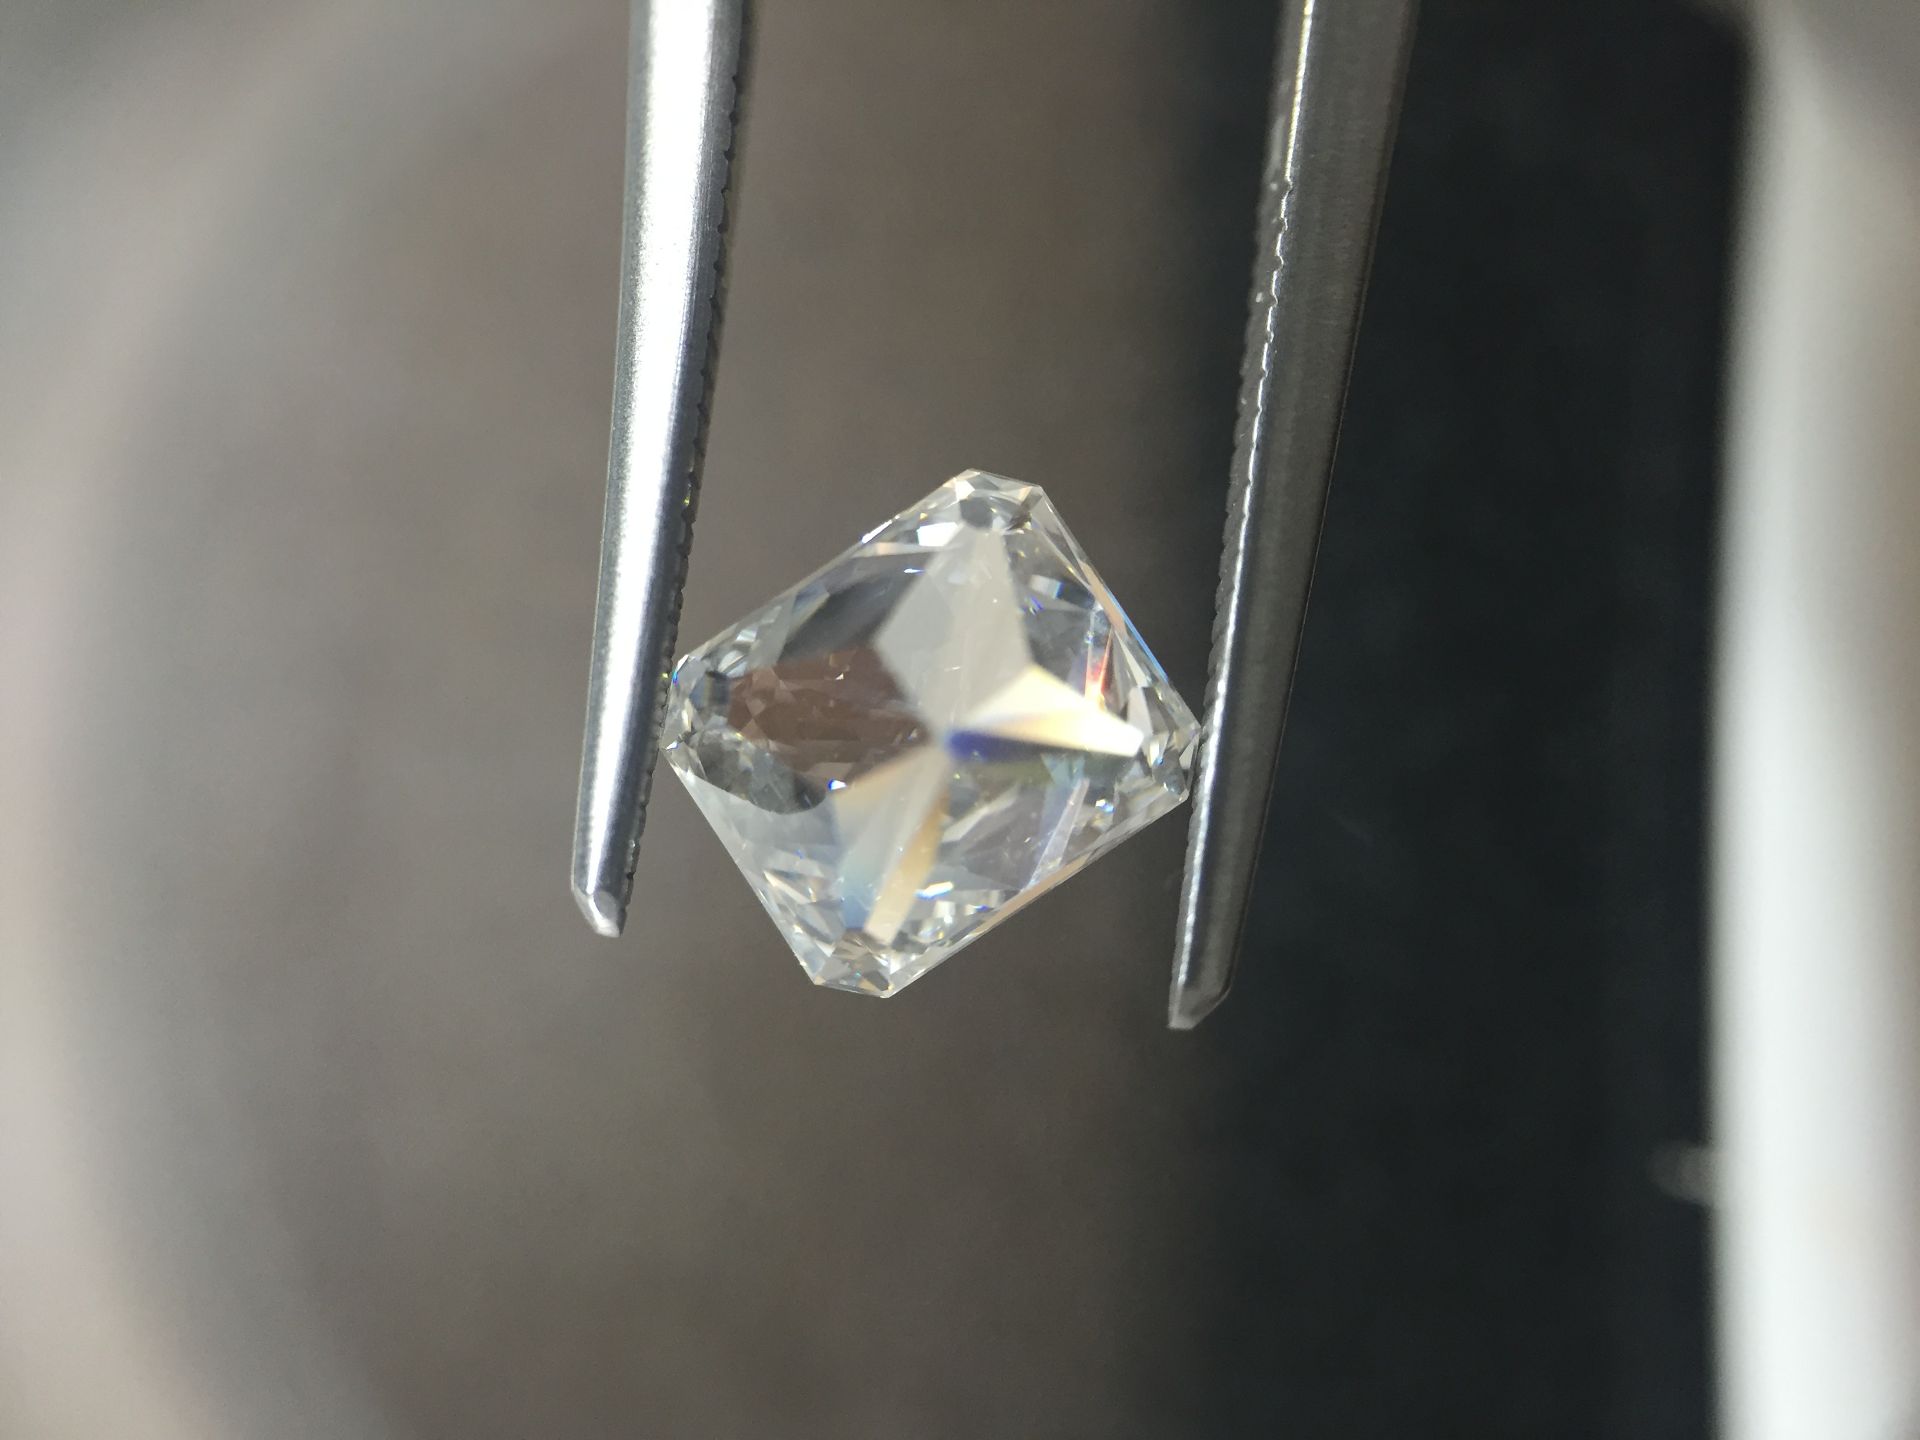 1.30ct radiant cut diamond. G colour, VS1 clarity. GIA certification - 1249438866. 6.90 x 5.87 x 4.